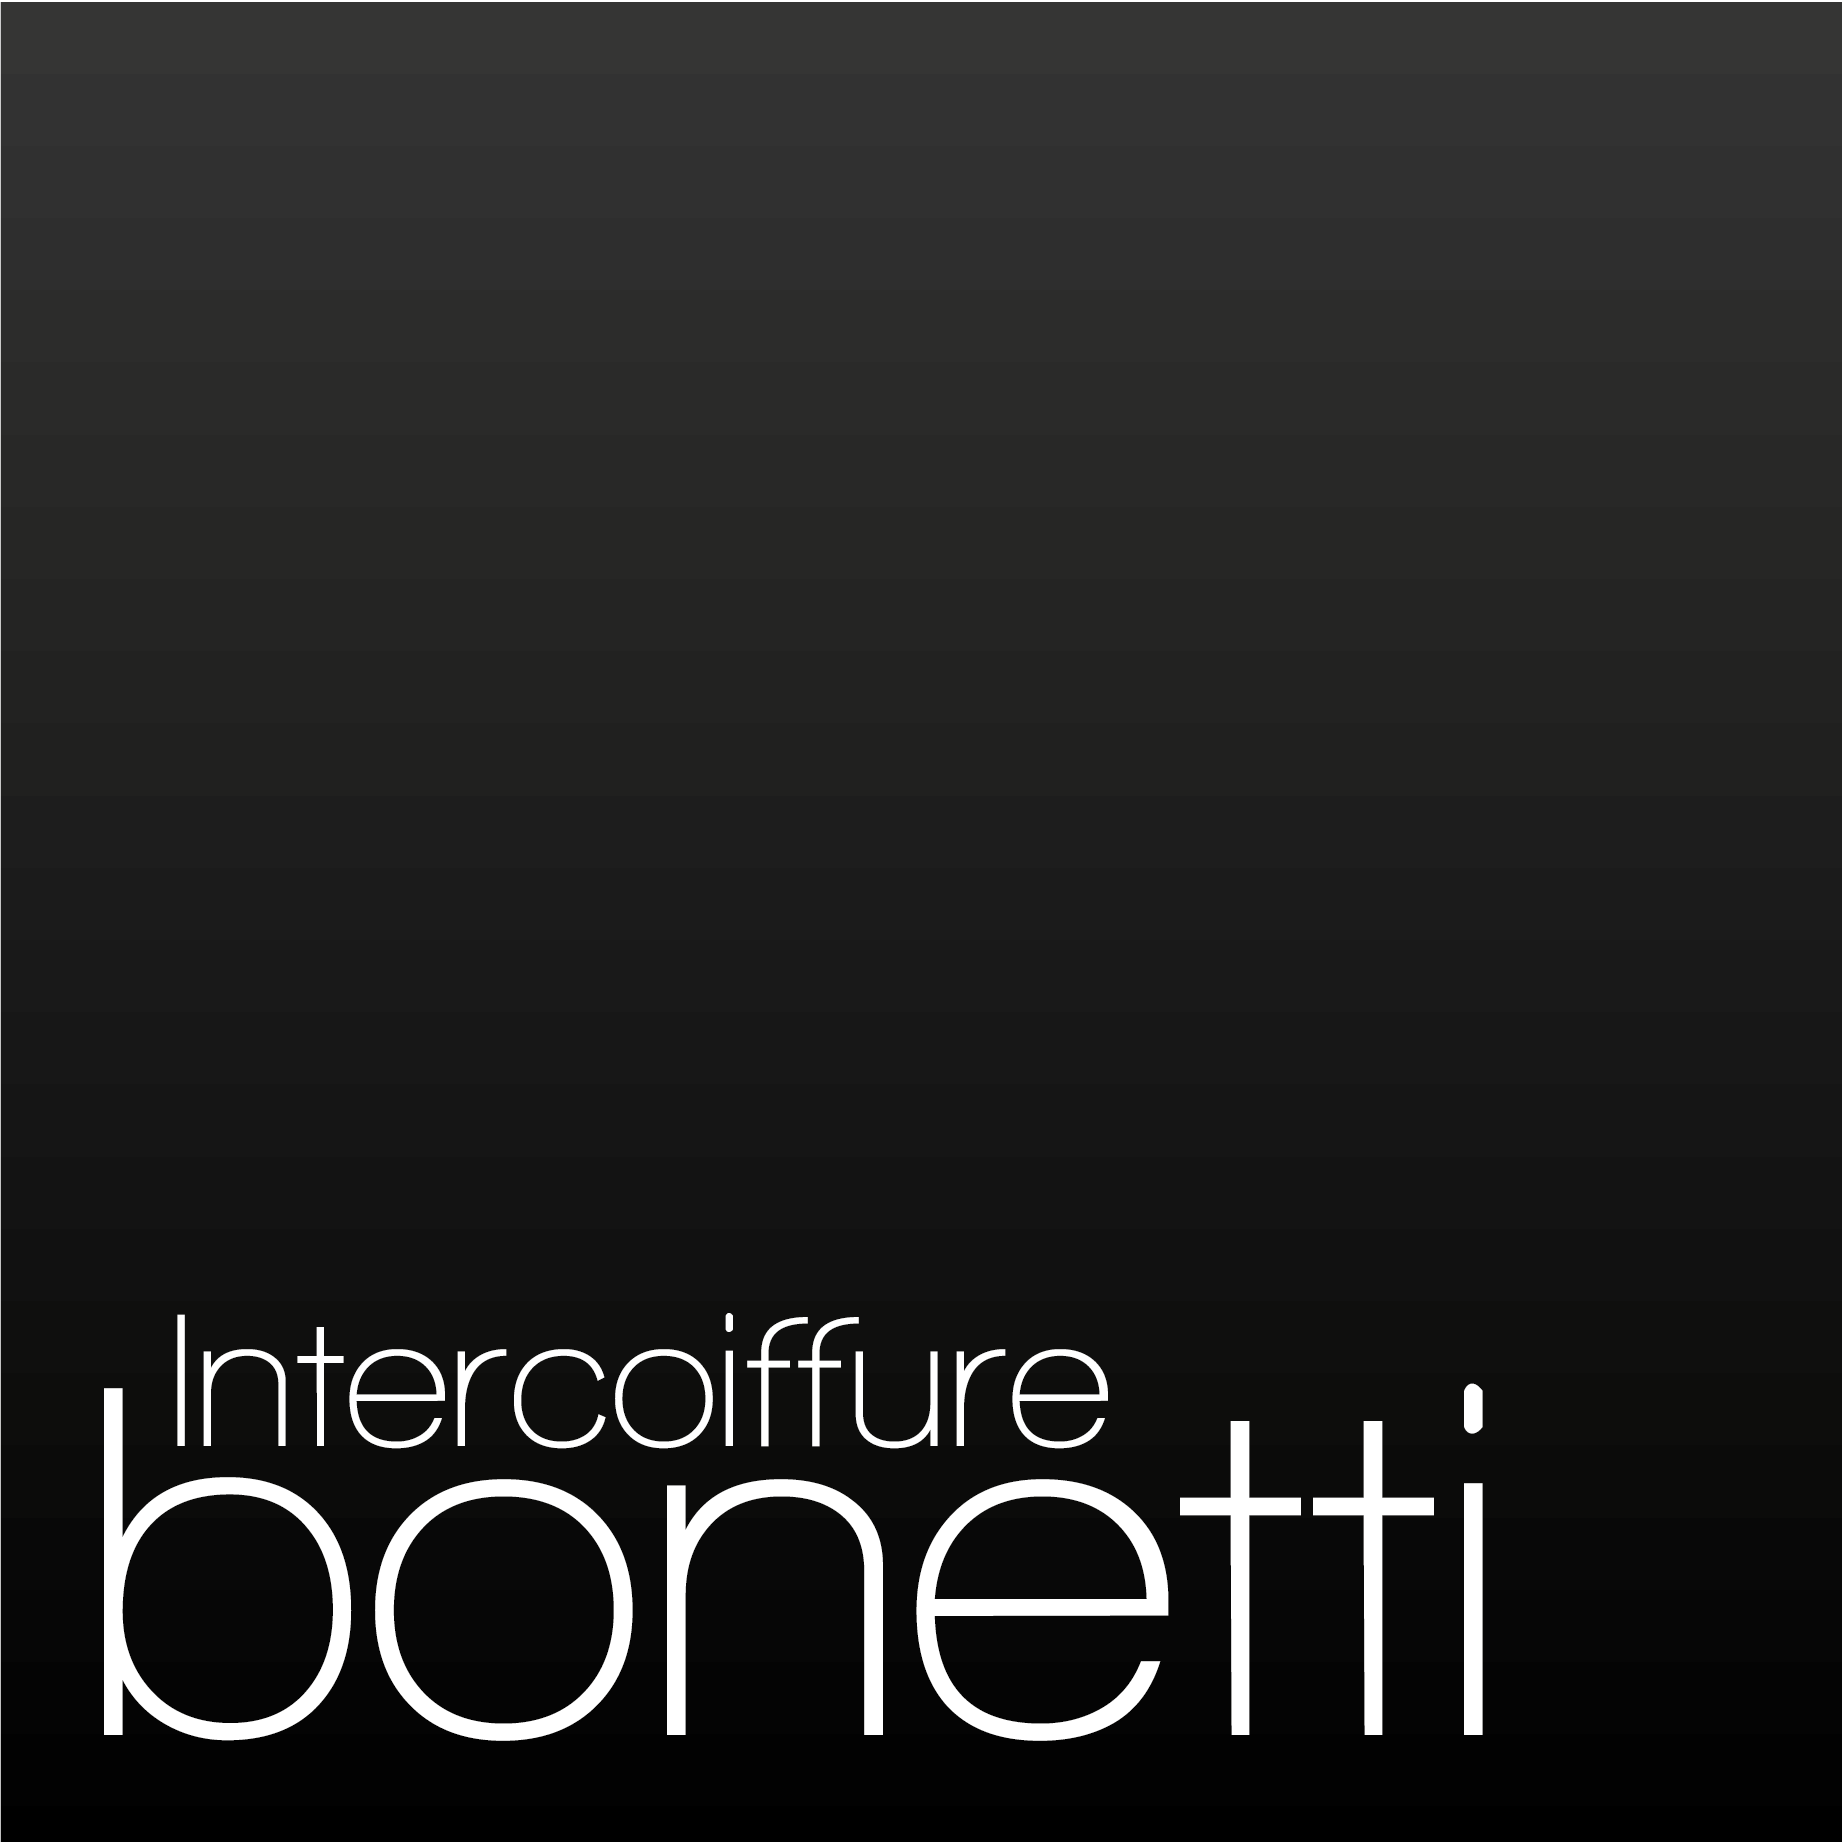 Intercoiffure Bonetti